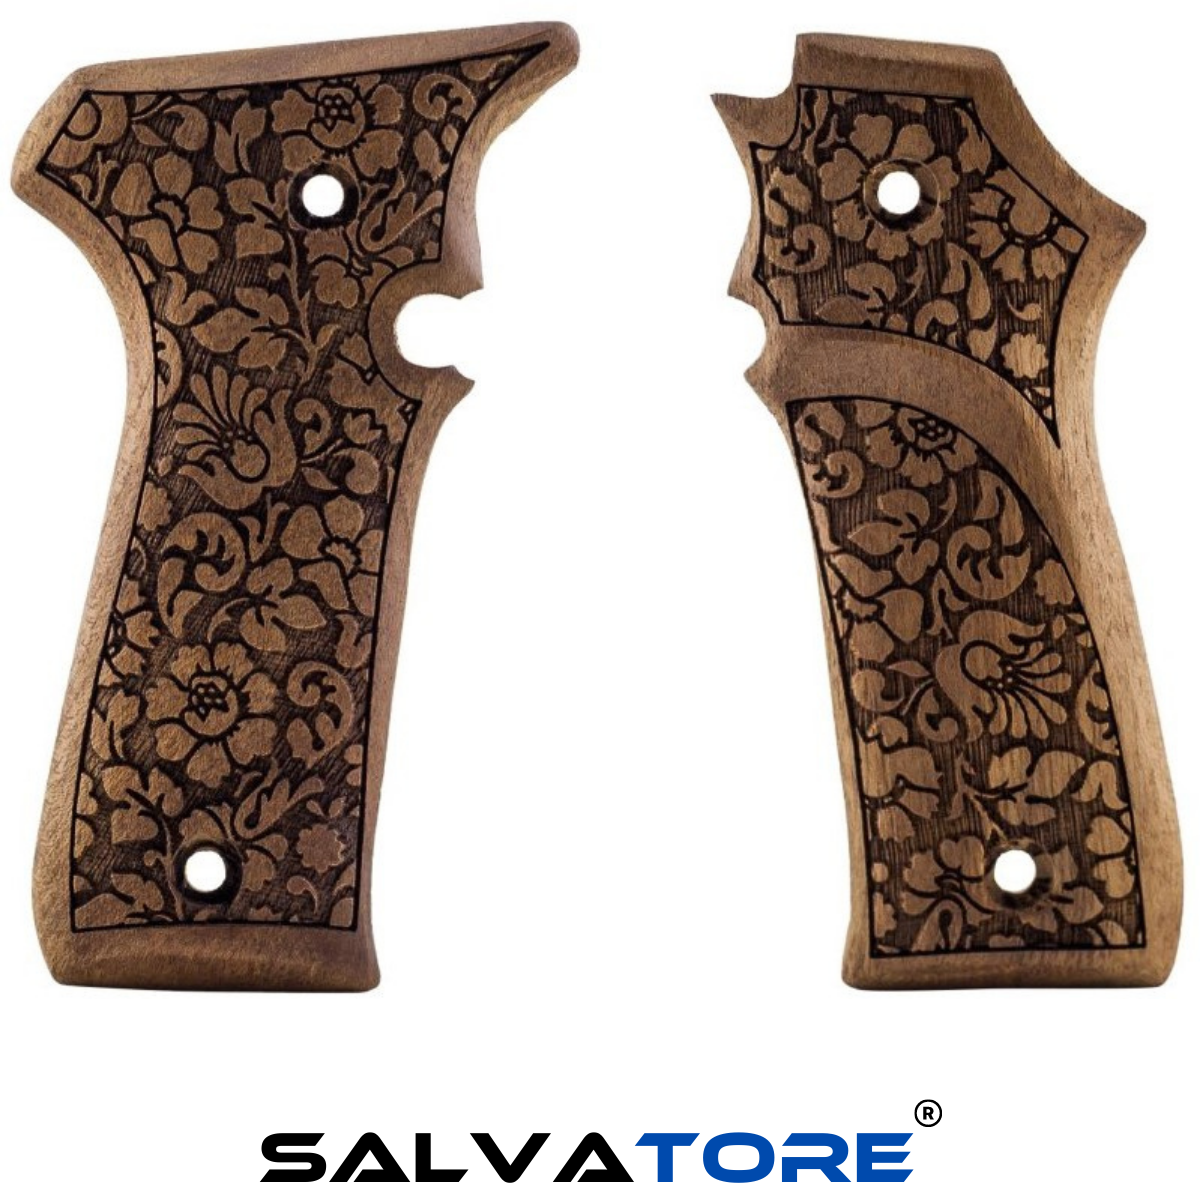 Salvatore Pistol Grips Revolver Grips For LLAMA Handmade Walnut Gun Accessories Hunting Shooting